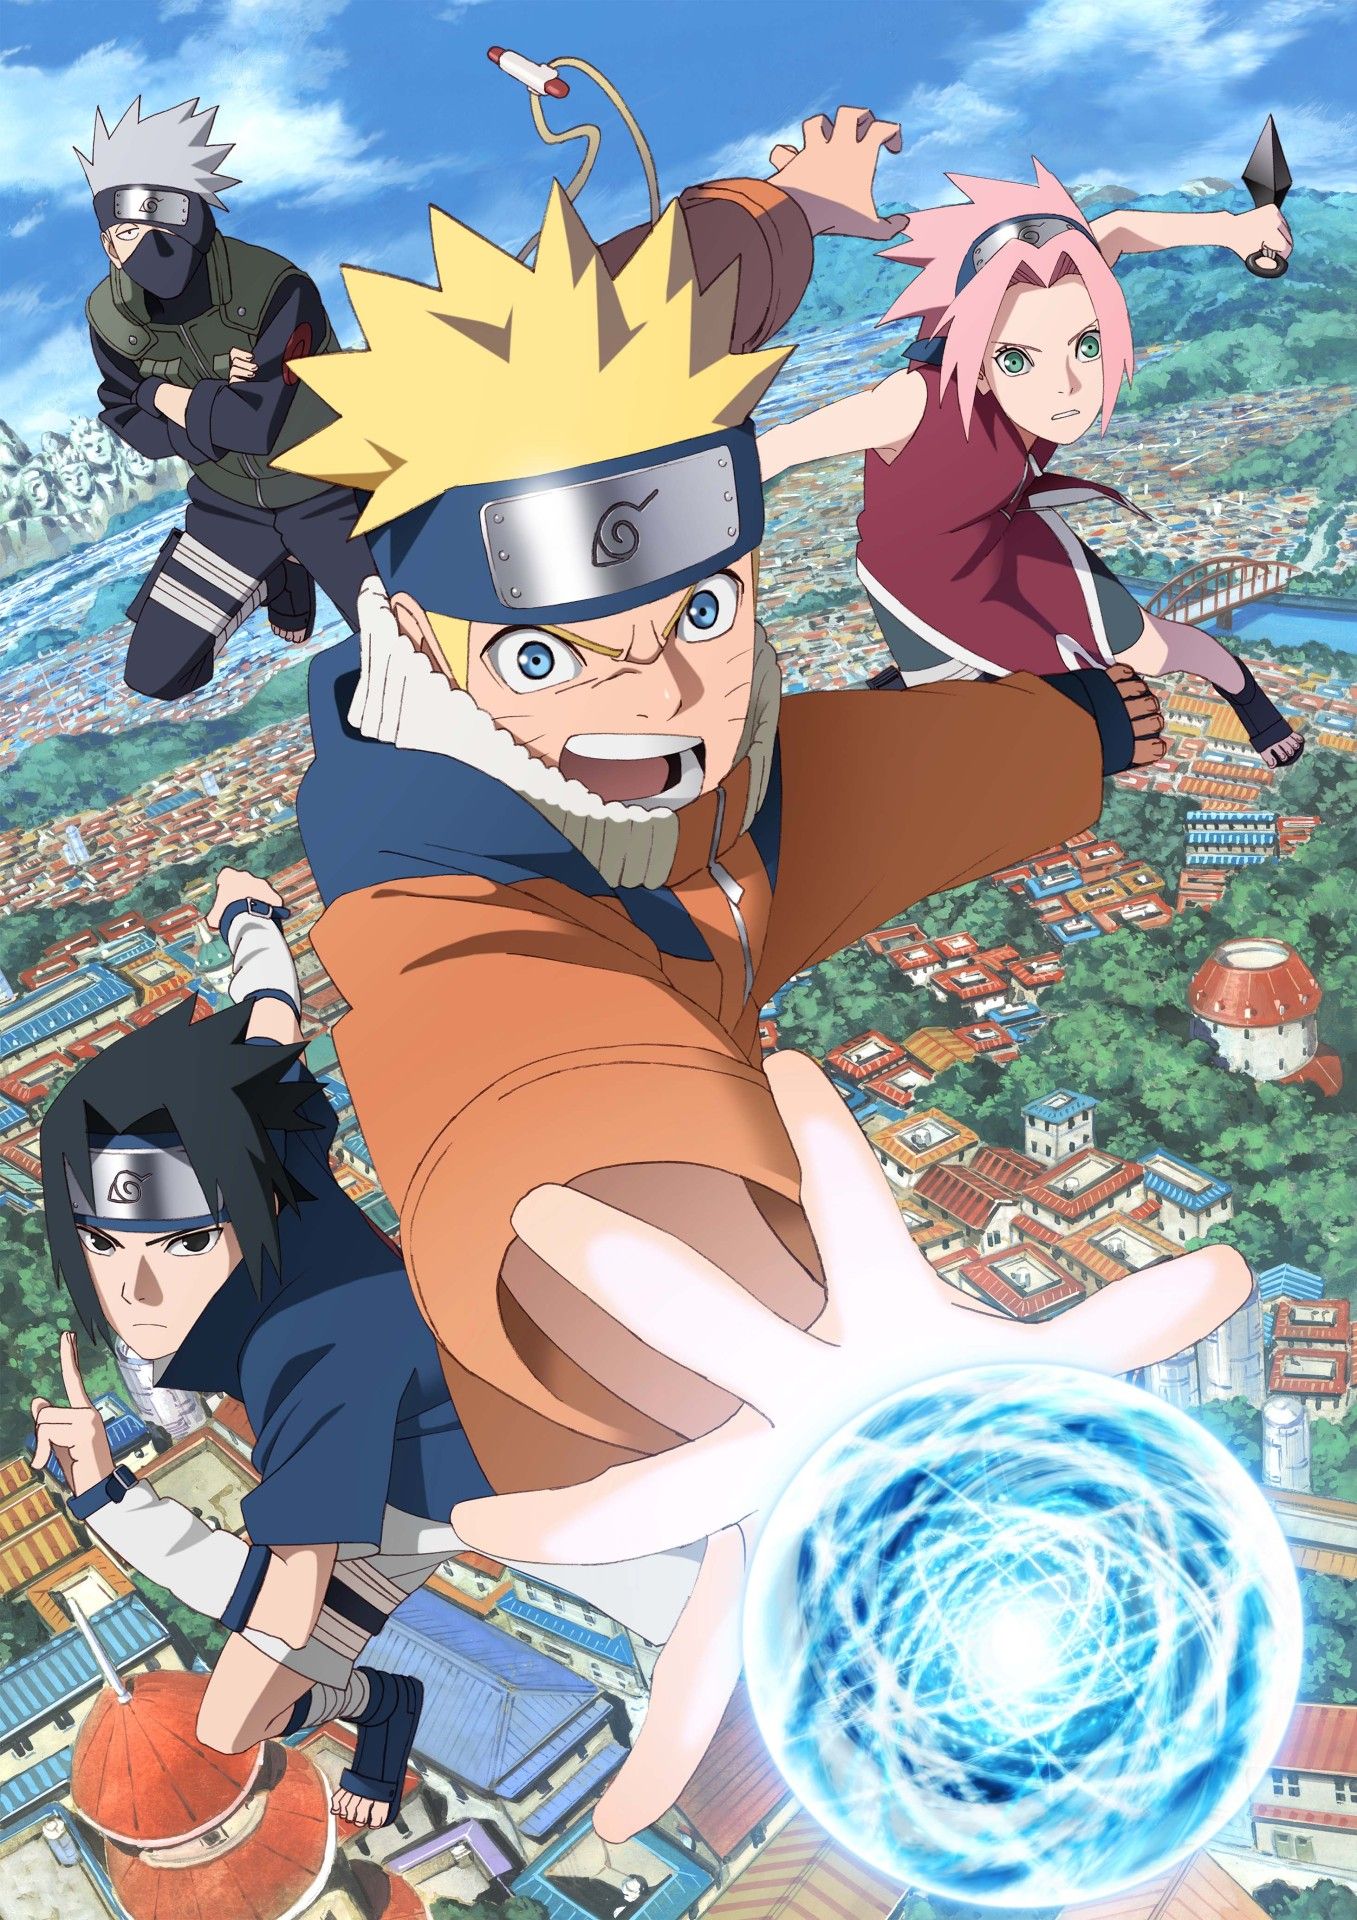 Naruto Team Reanimated Classic Scenes for Anime's 20th Anniversary